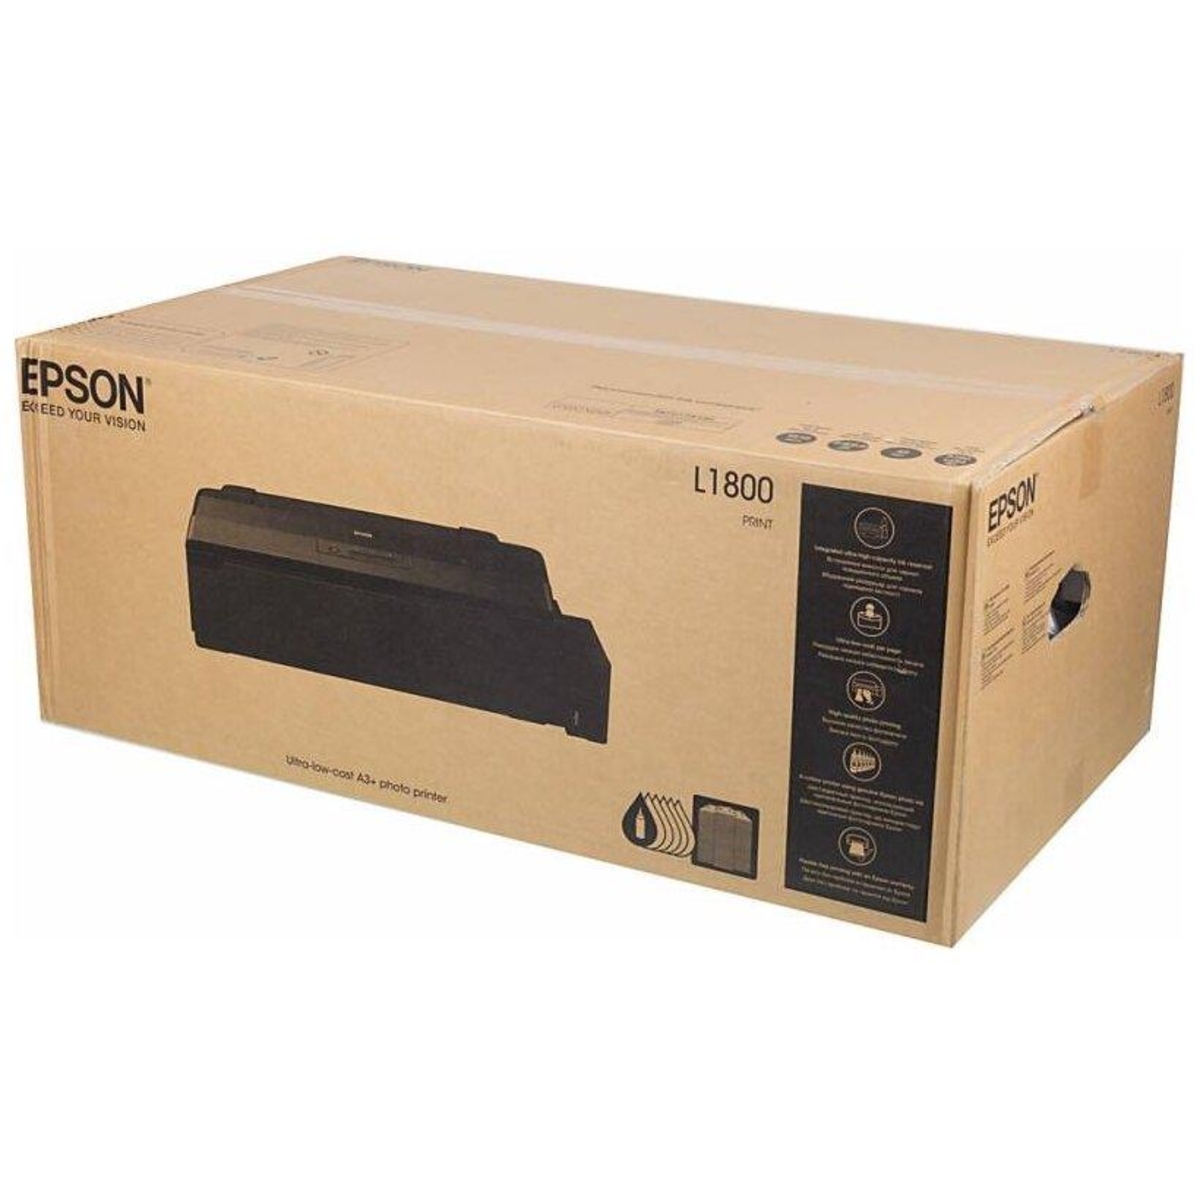 Epson 1800. Принтер Epson l1800. Принтер Эпсон 1800. Epson l1800 (a3+, 15 стр / мин, 5760x1440 dpi, 6 красок, USB2.0). Принтер струйный Epson l1800, цветной..